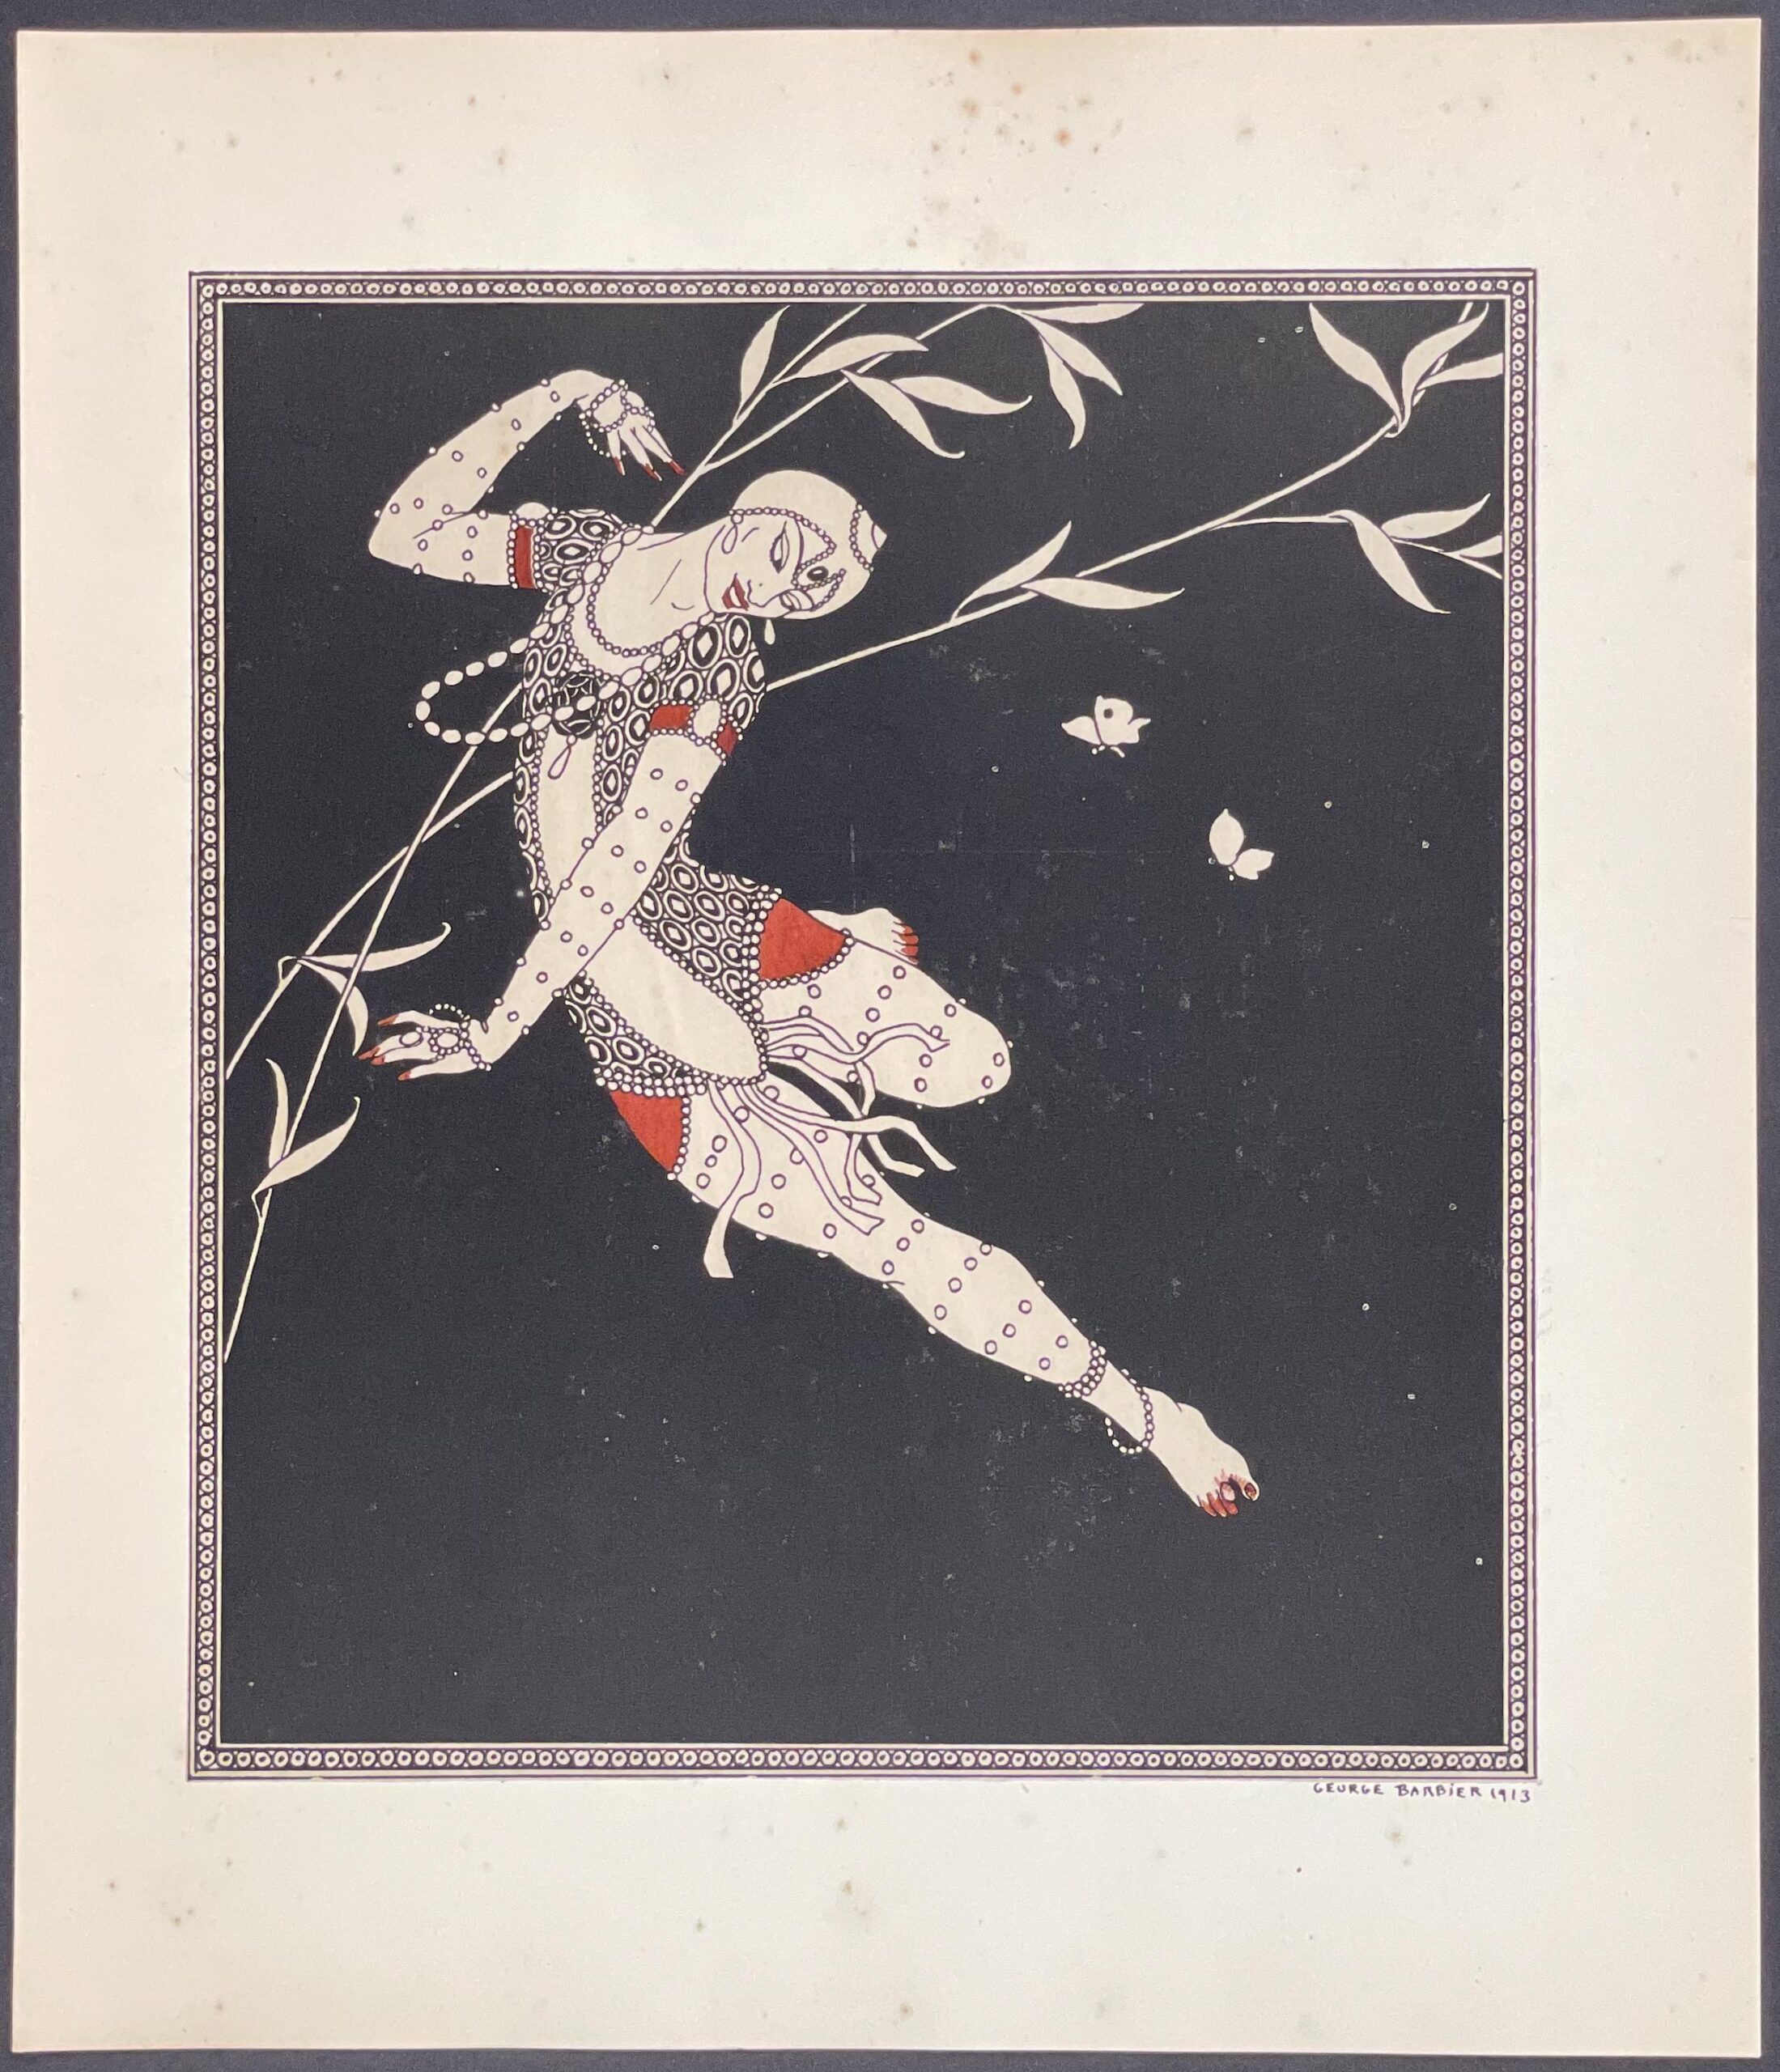 "Dancer - Nijinsky Dance" by Georges Barbier